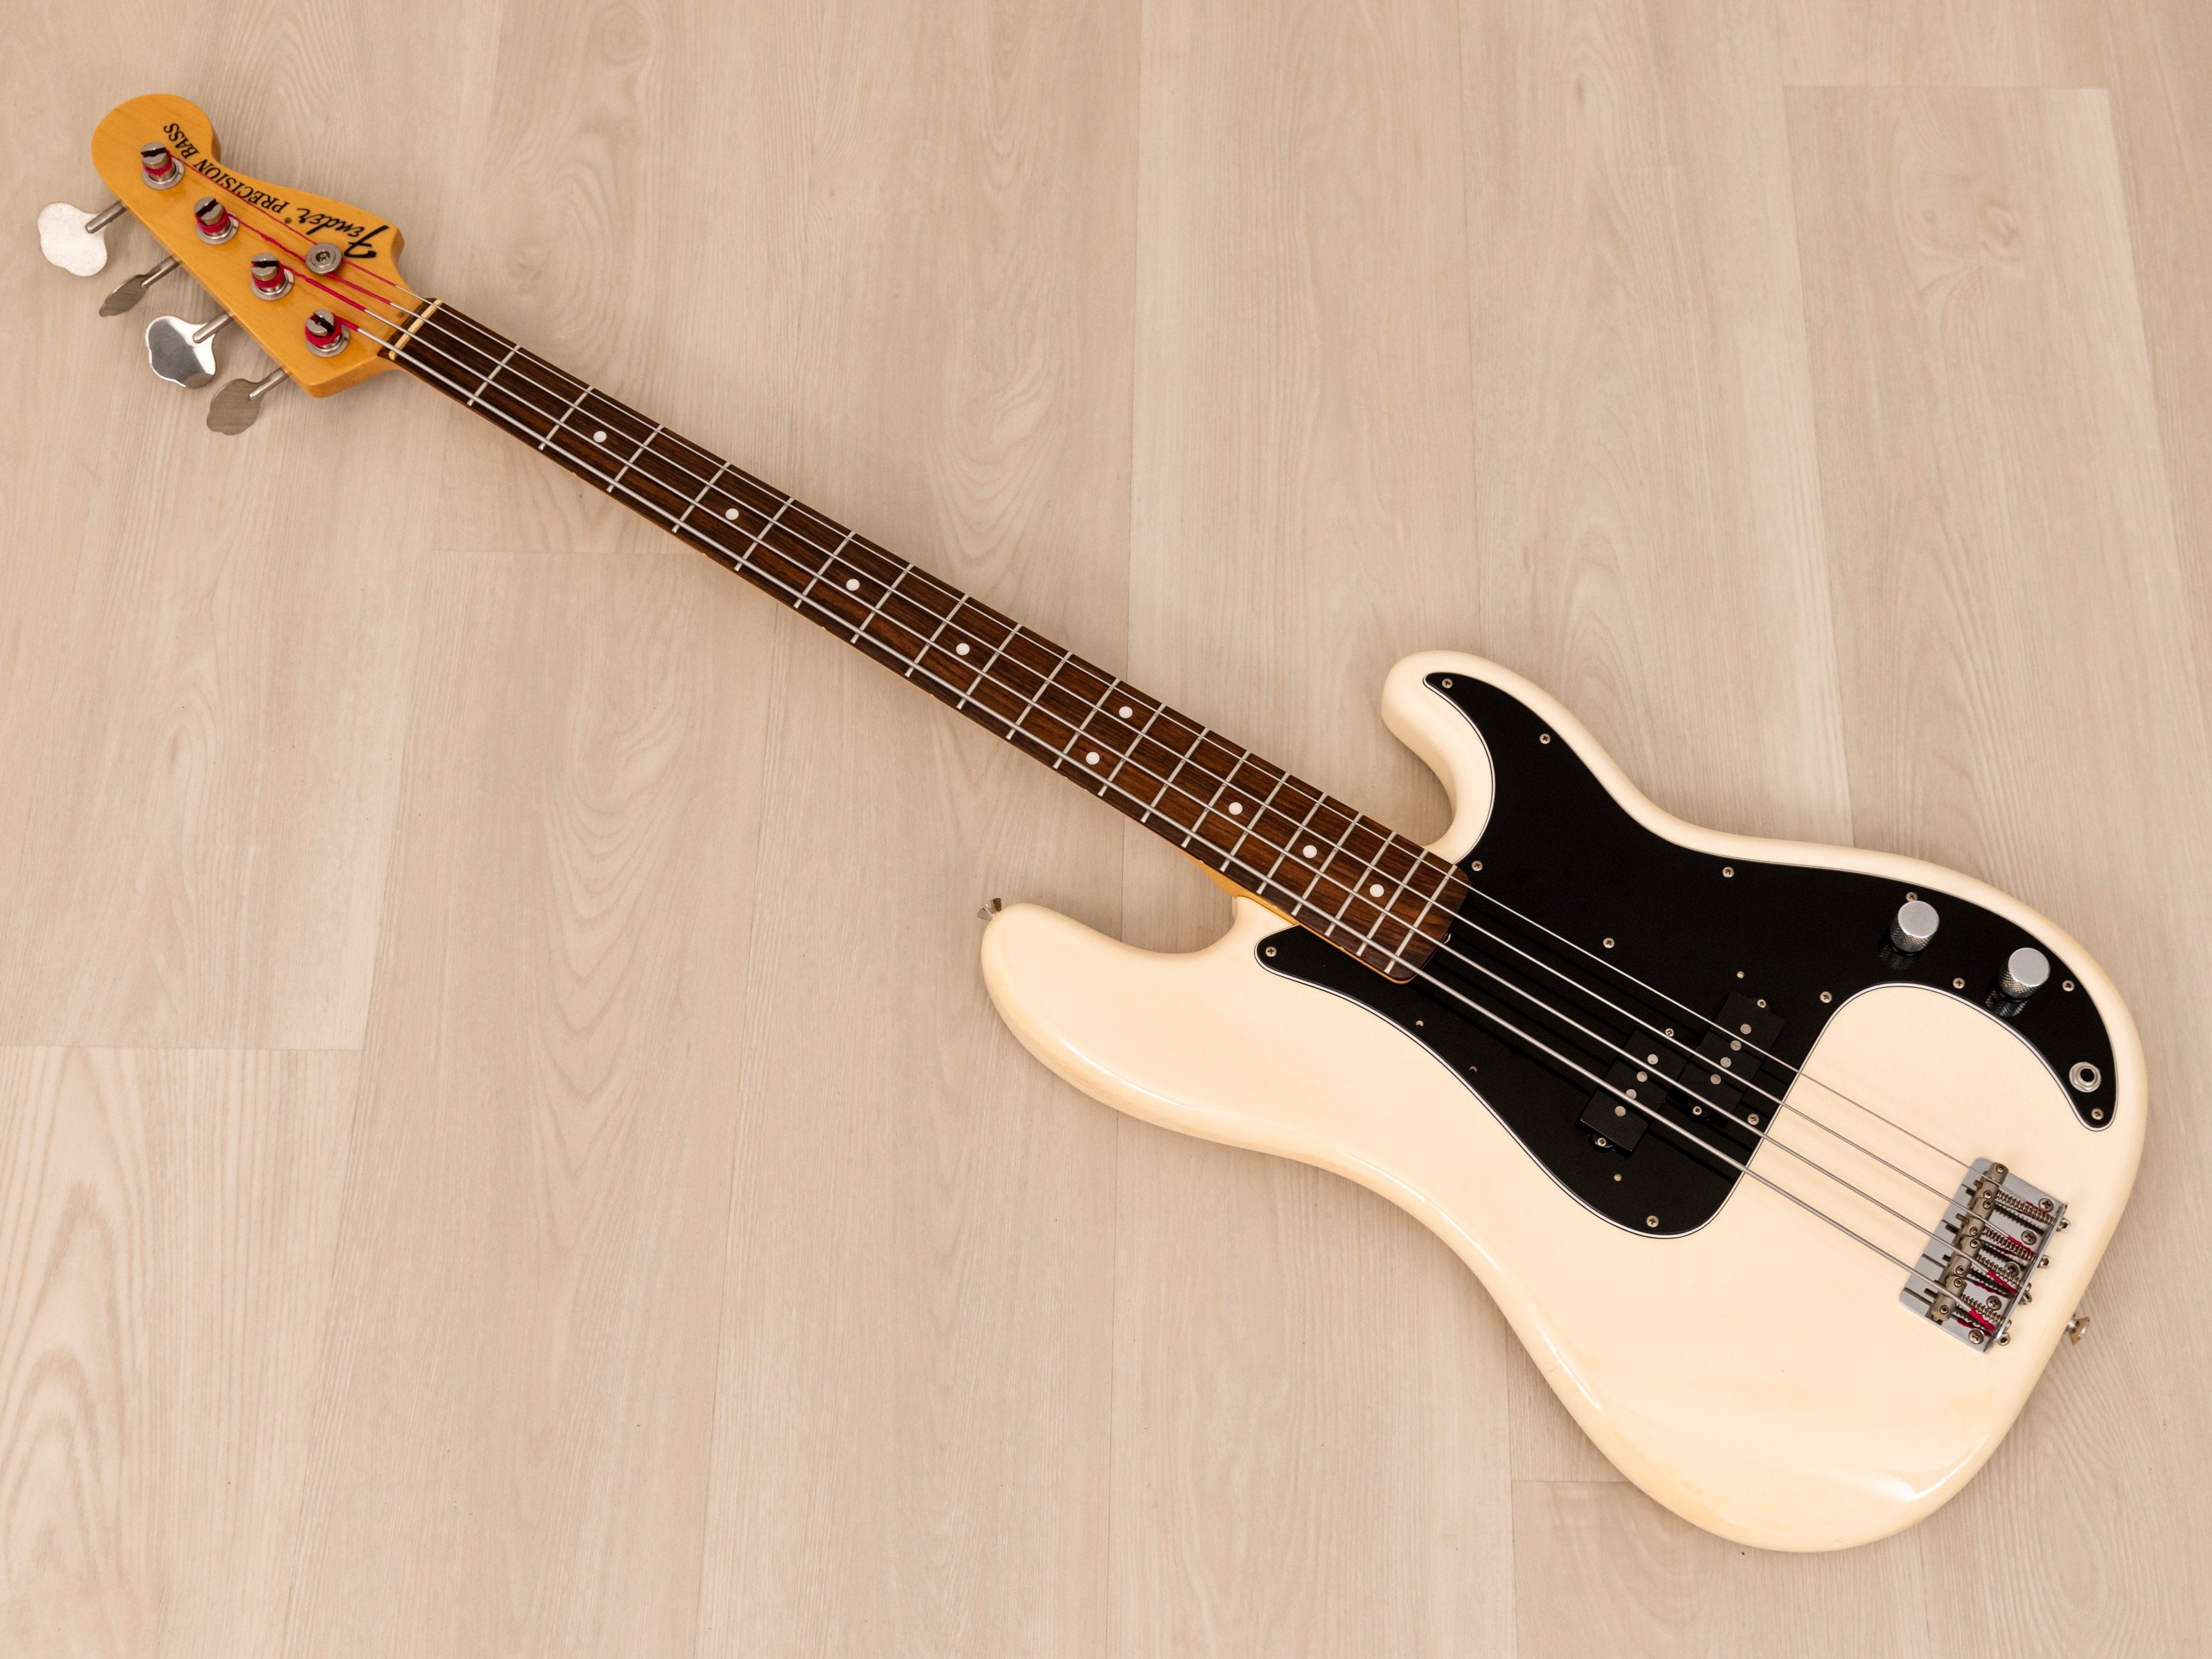 2004 Fender Precision Bass '70 Vintage Reissue PB70-70US Olympic White, Japan CIJ